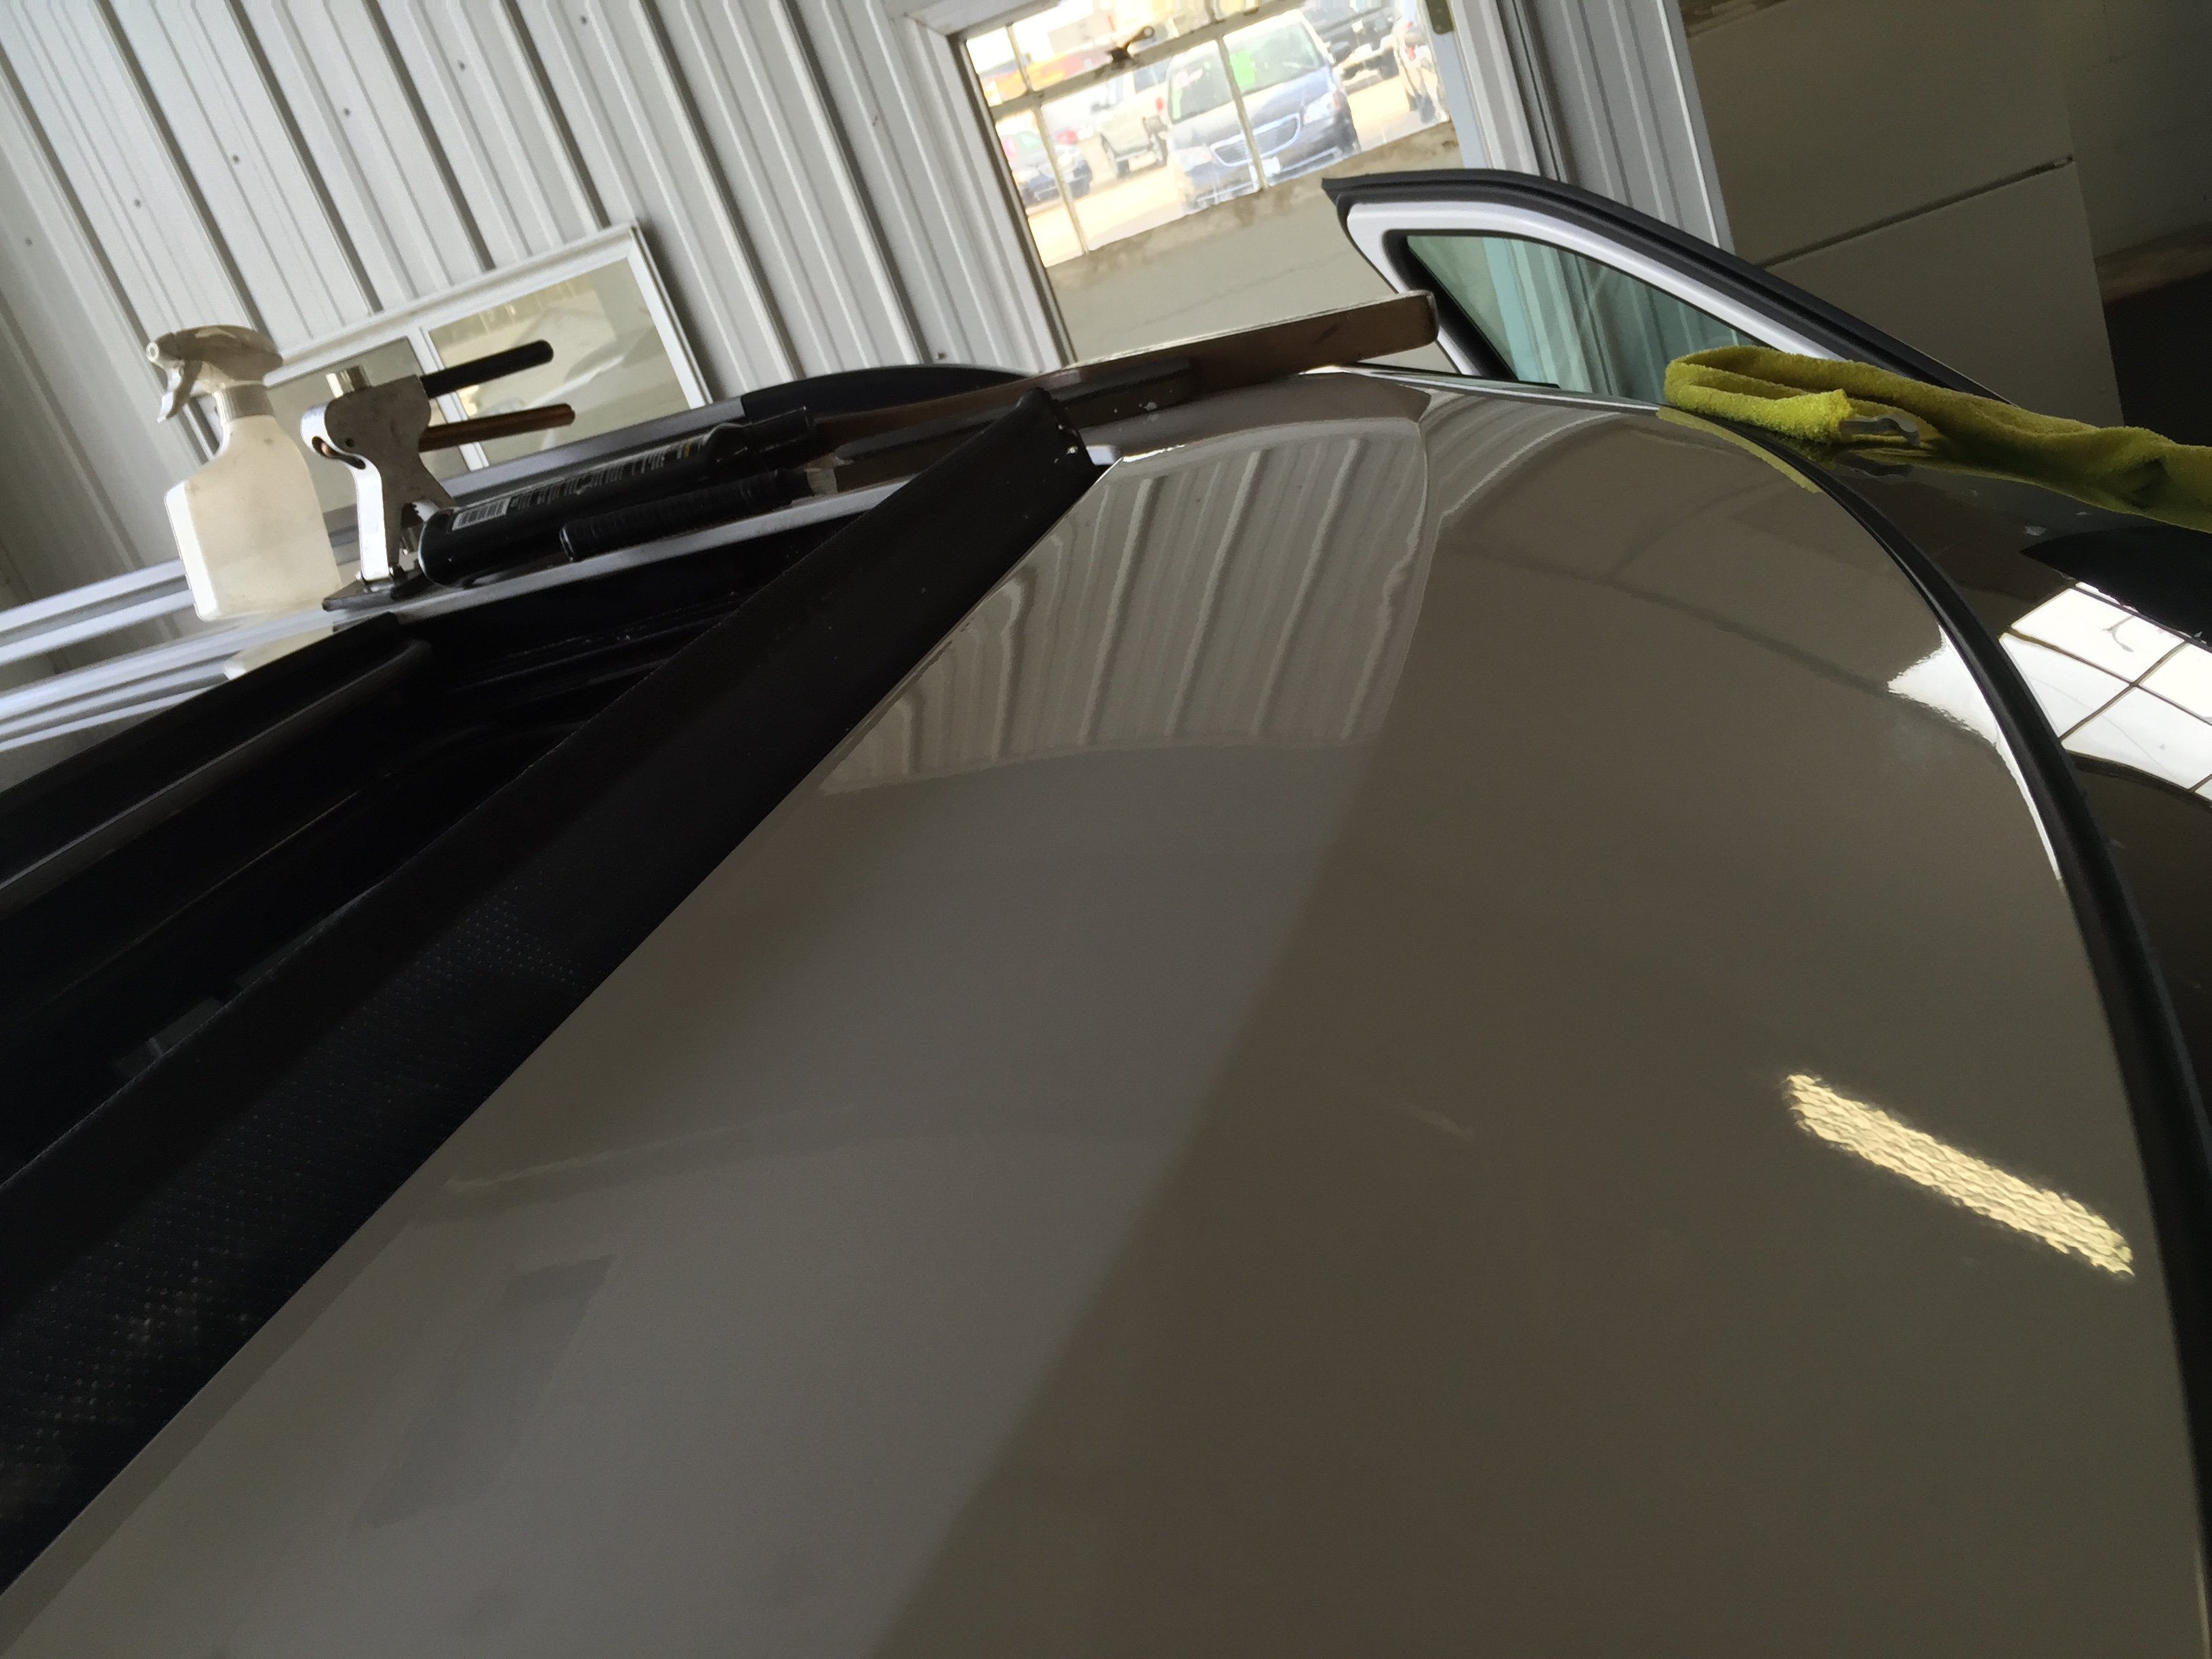 2014 Ford Explorer XLT Tri Coat White, Paintless Dent Repair Roof Dents, Mobile Dent Repair. , Springfield IL, Pana IL Taylorville IL